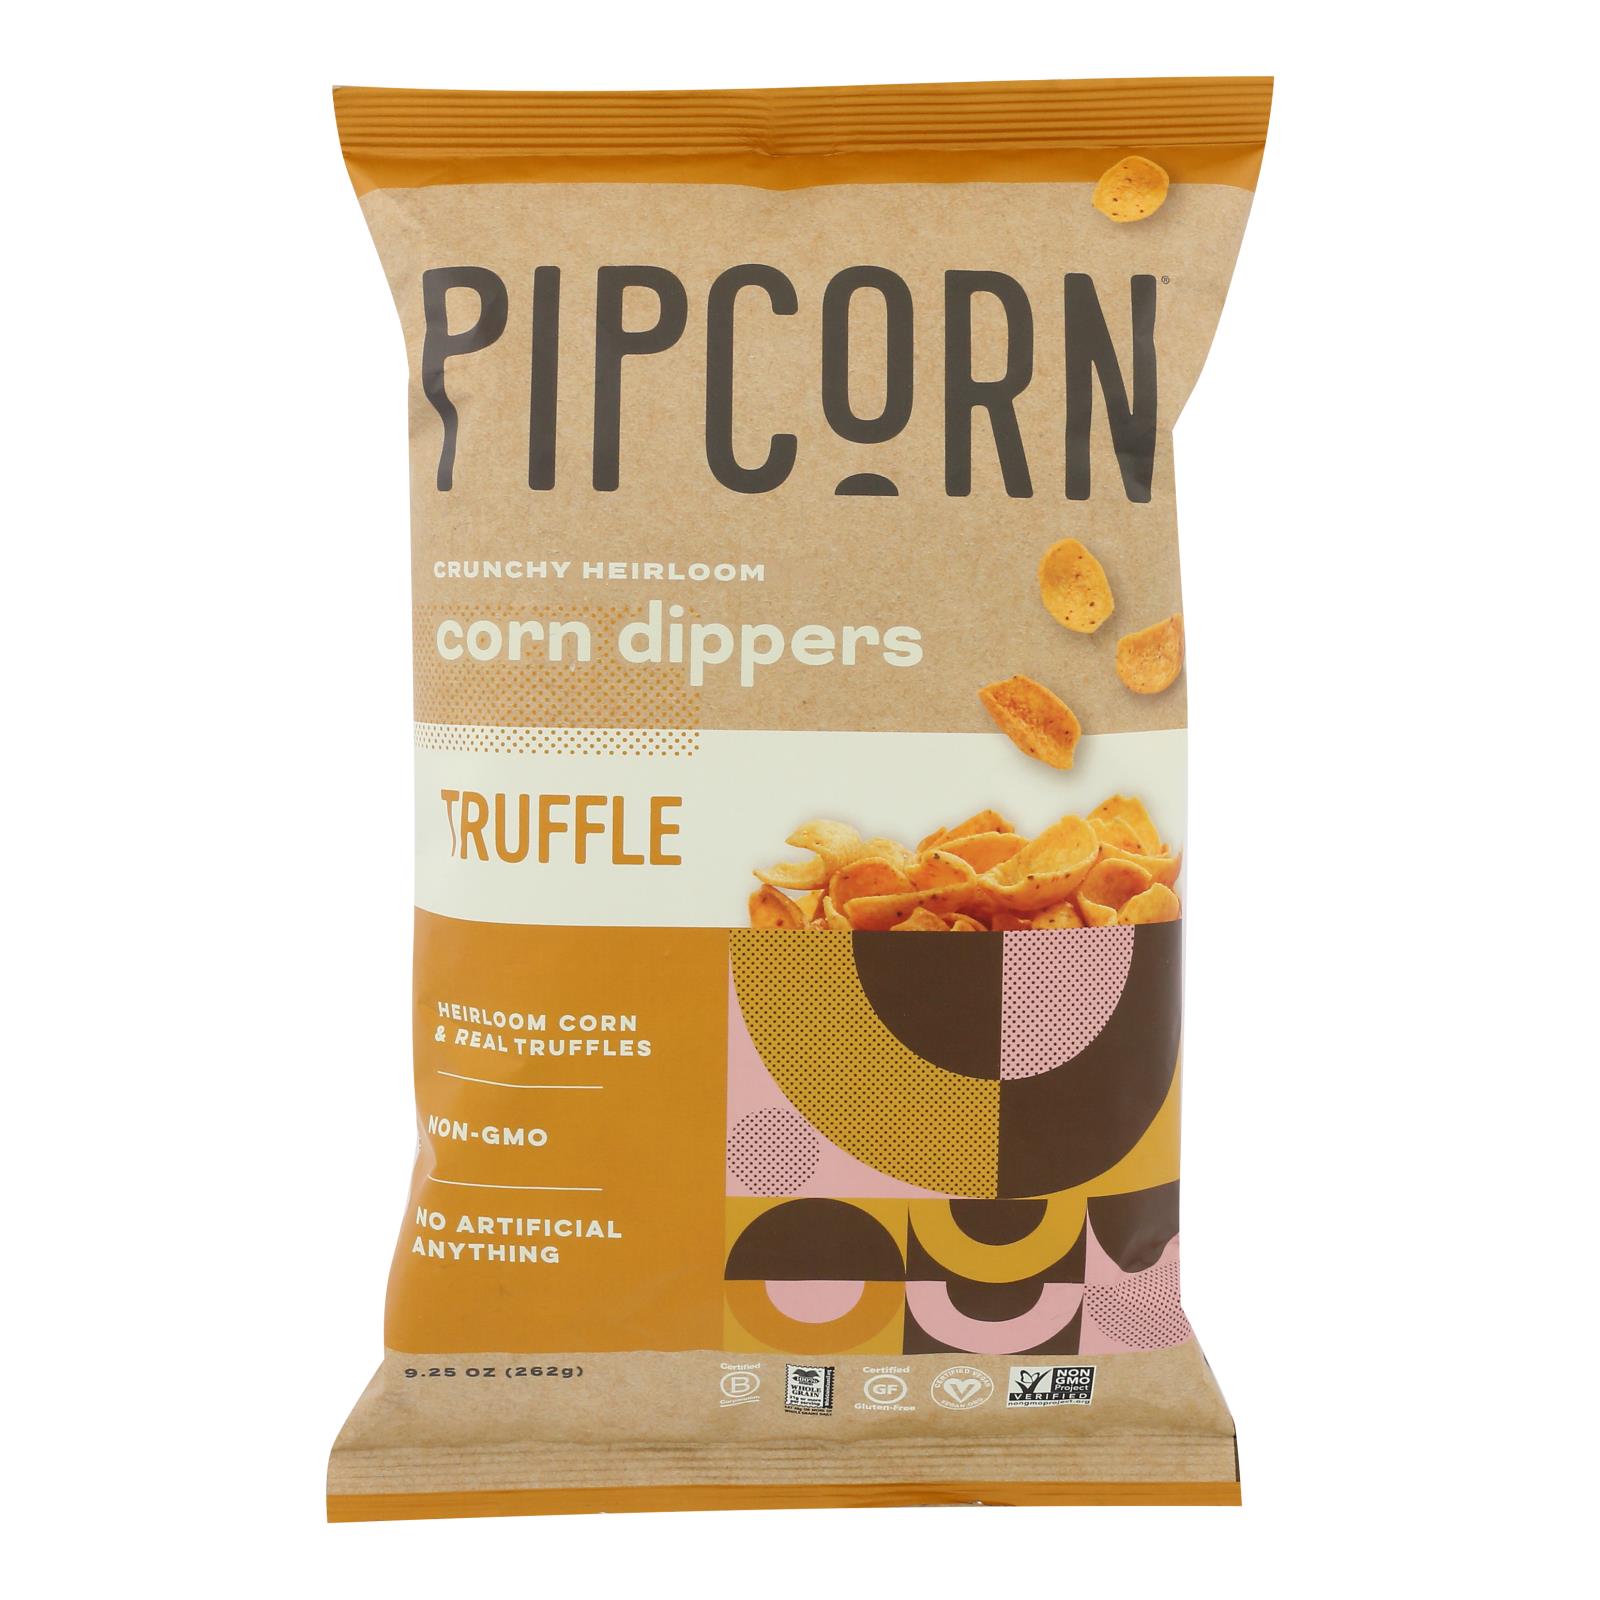 Pipcorn - Chps Corn Dpprs Truffle - Case of 12 - 9.25 OZ